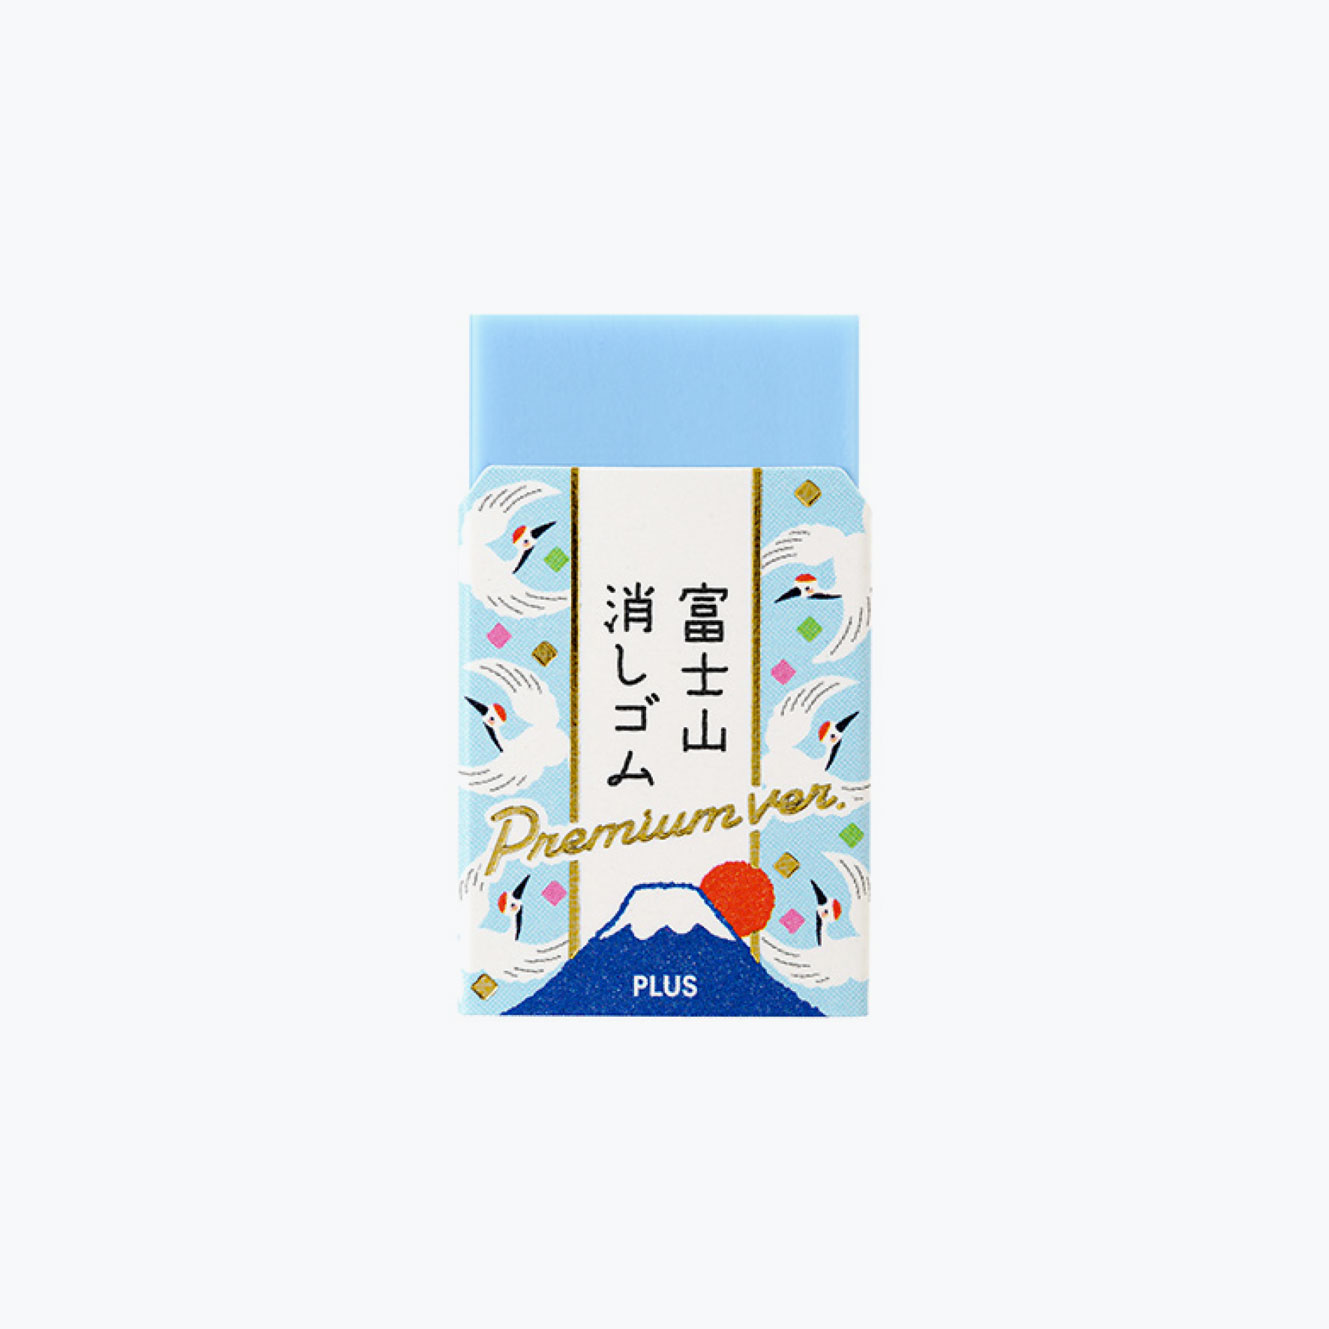 PLUS Limited Edition Japan Mount MT. Fuji Art & Writing Eraser